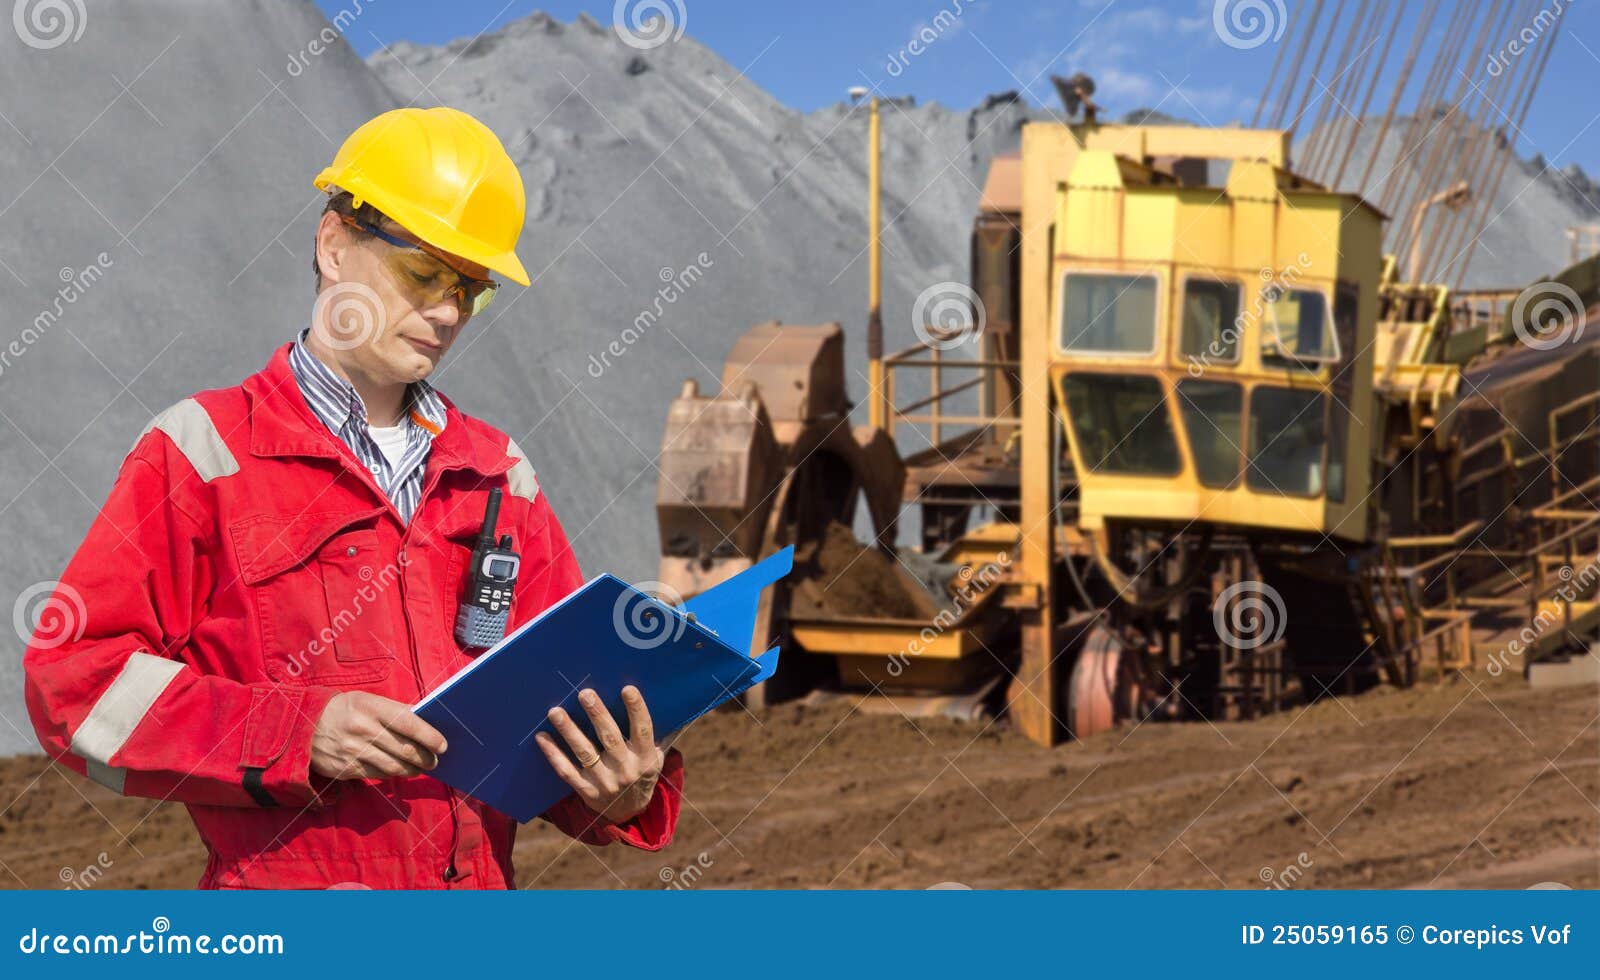 mining foreman